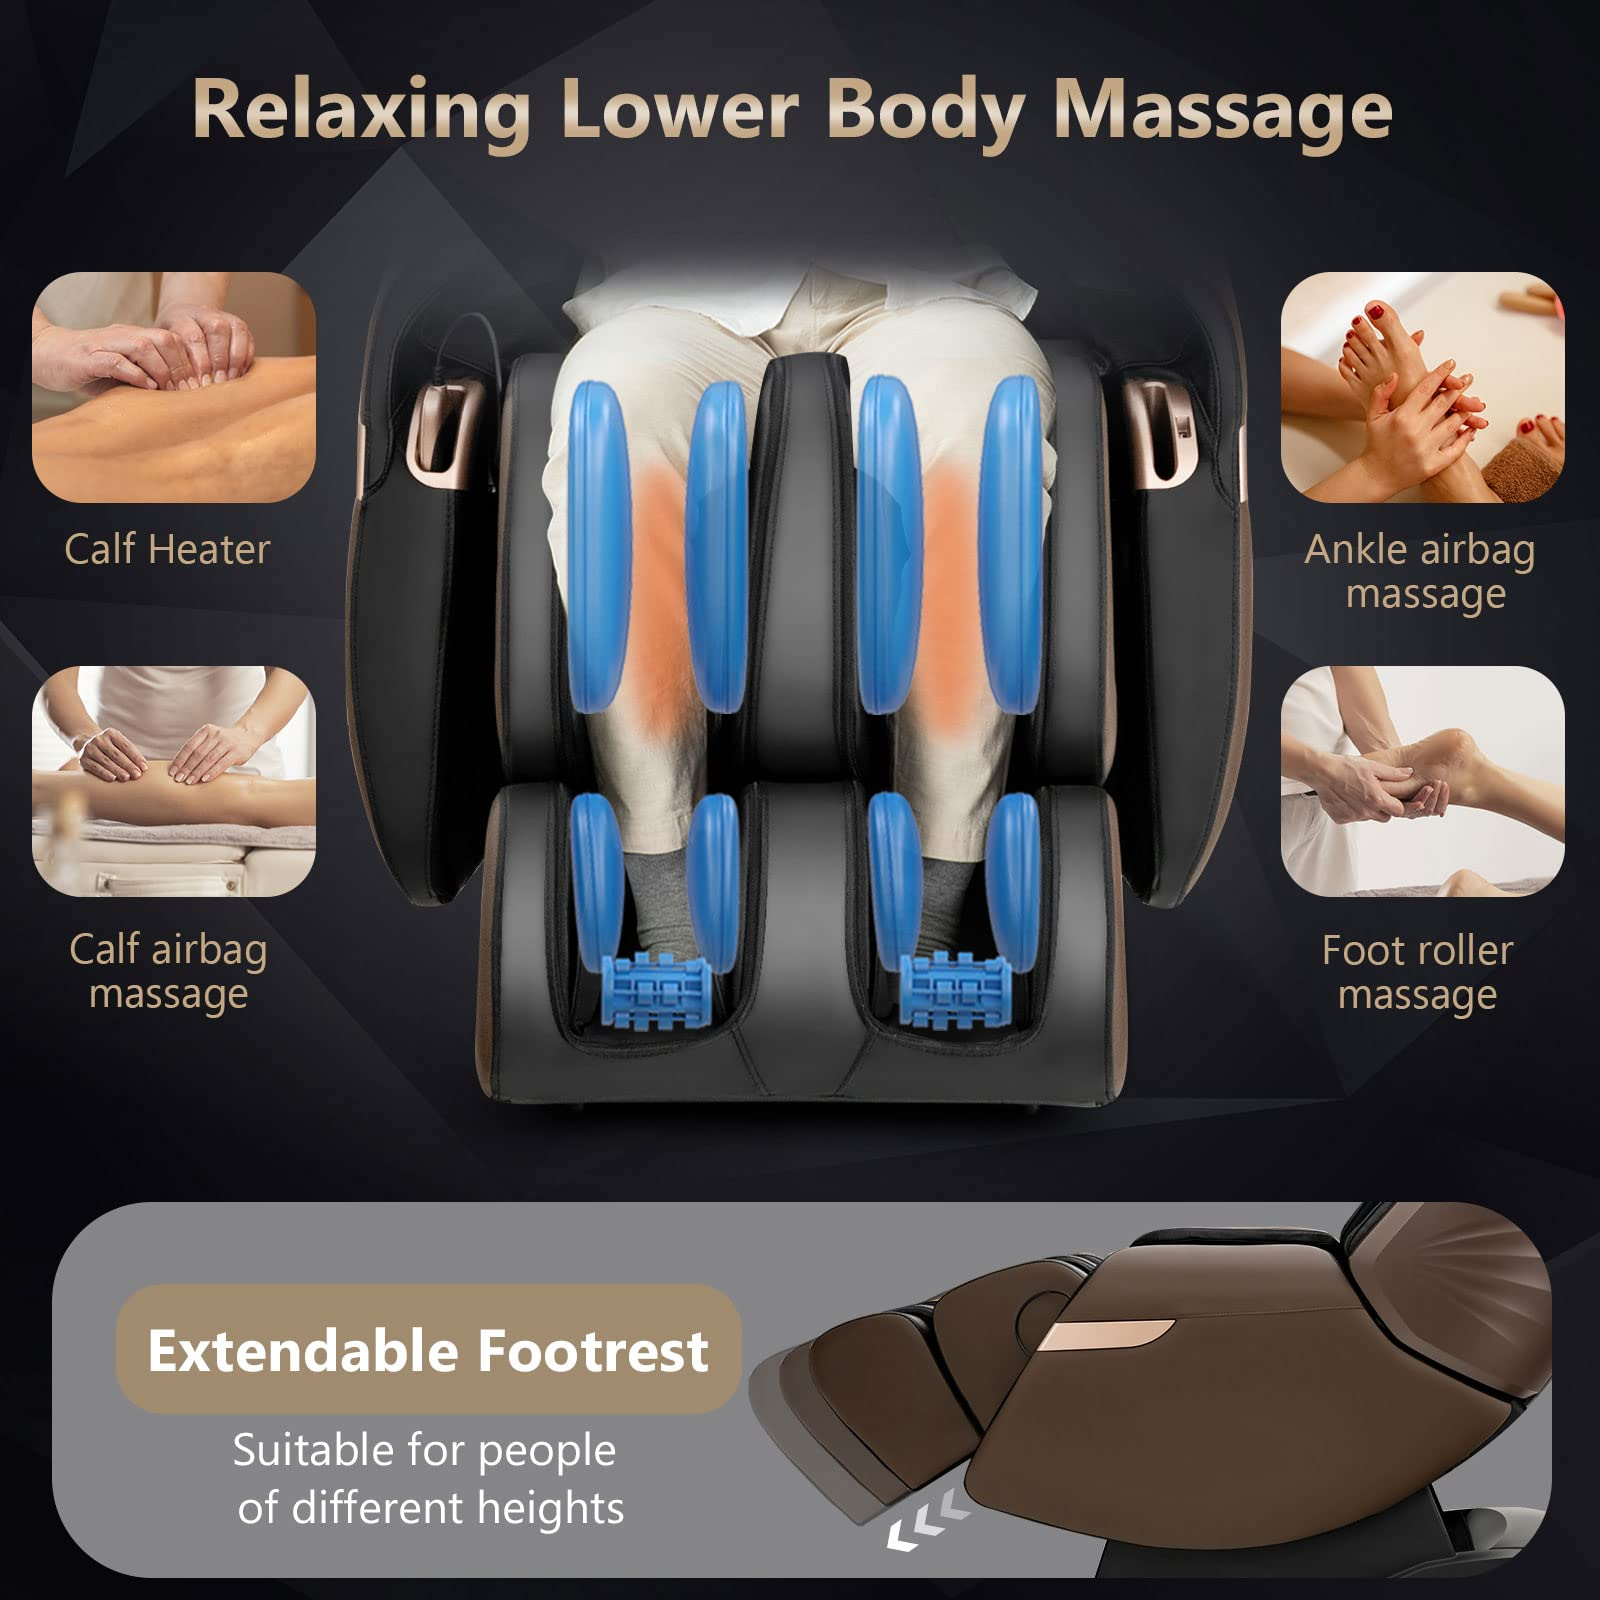 Giantex Massage Chair Full Body - 3D Electric Zero Gravity Shiatsu Massage Recliner Chair